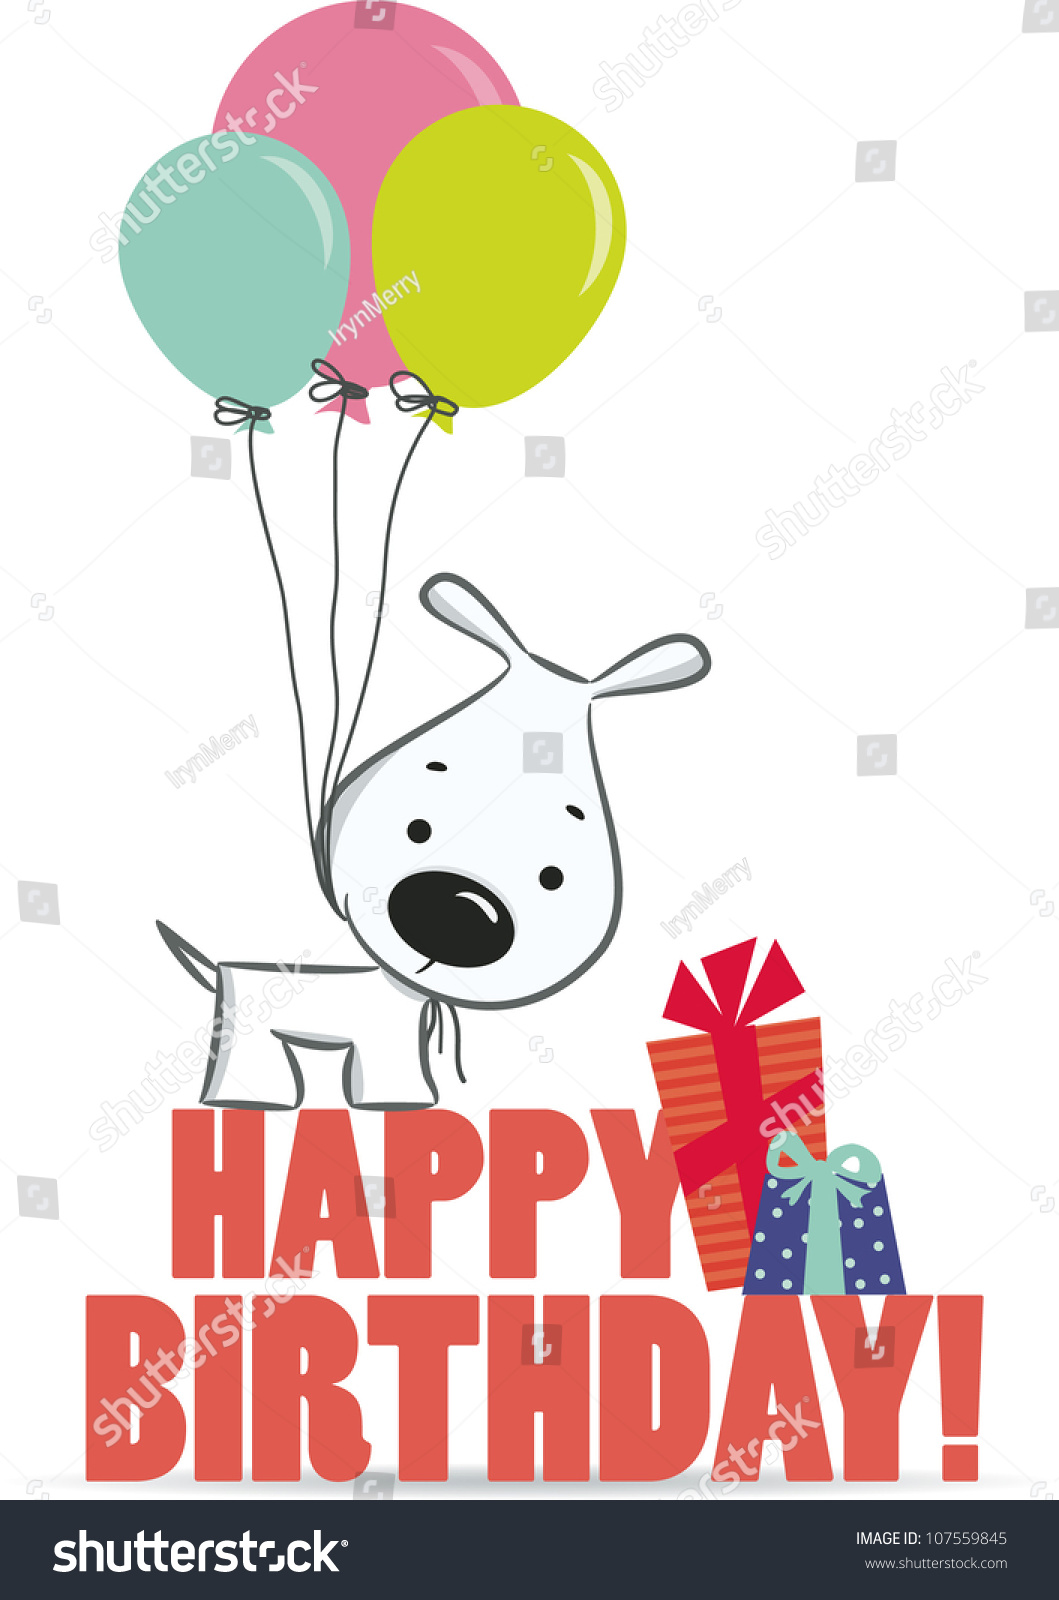 Cute Cartoon Dog With Balloons. A Birthday Greeting. Vector ...